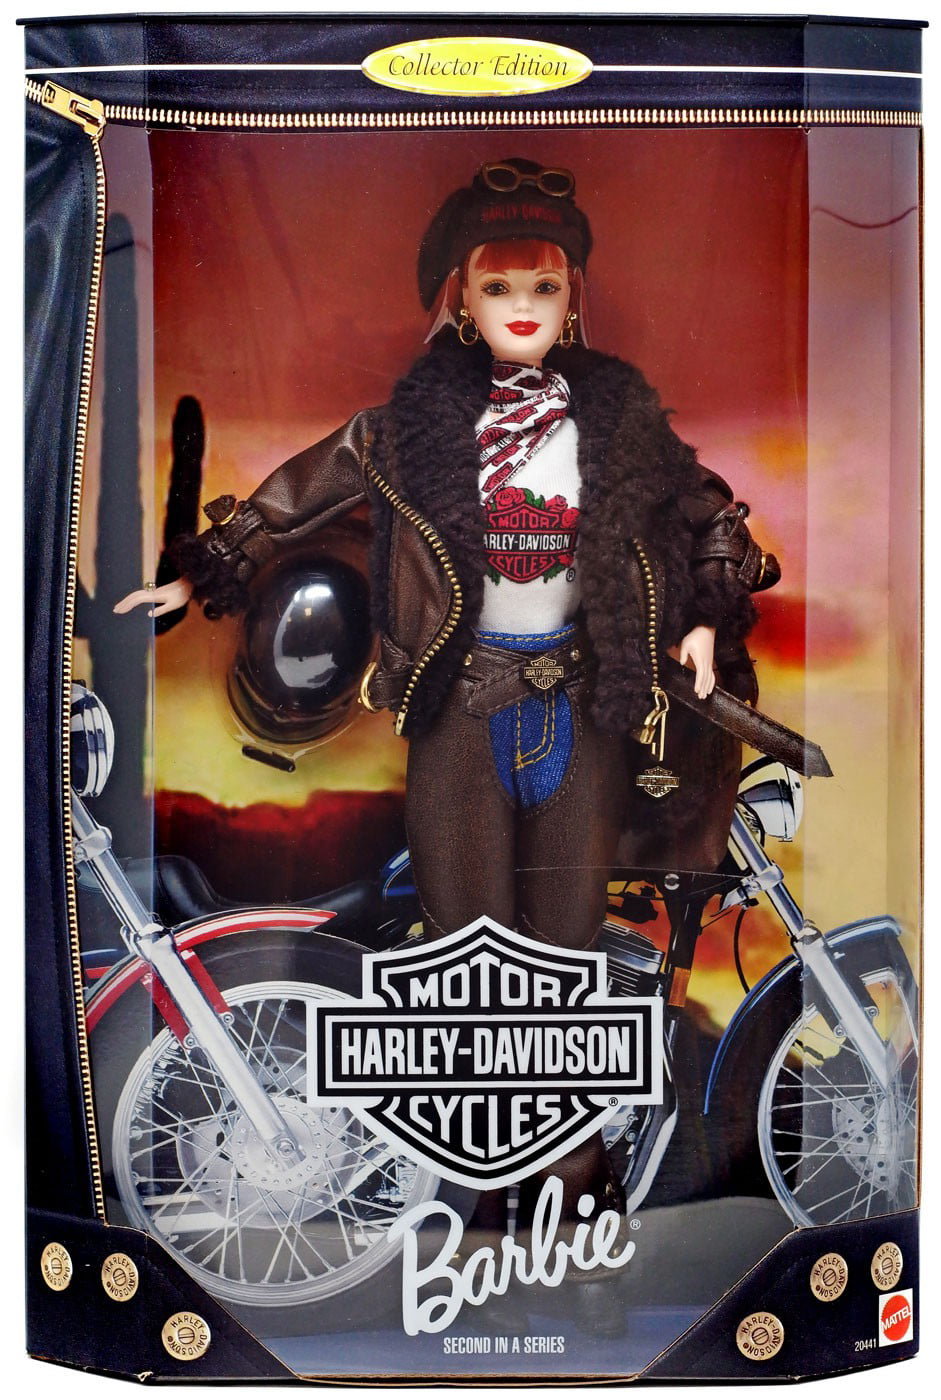 Harley Davidson Motor Cycle Barbie - recoveryparade-japan.com